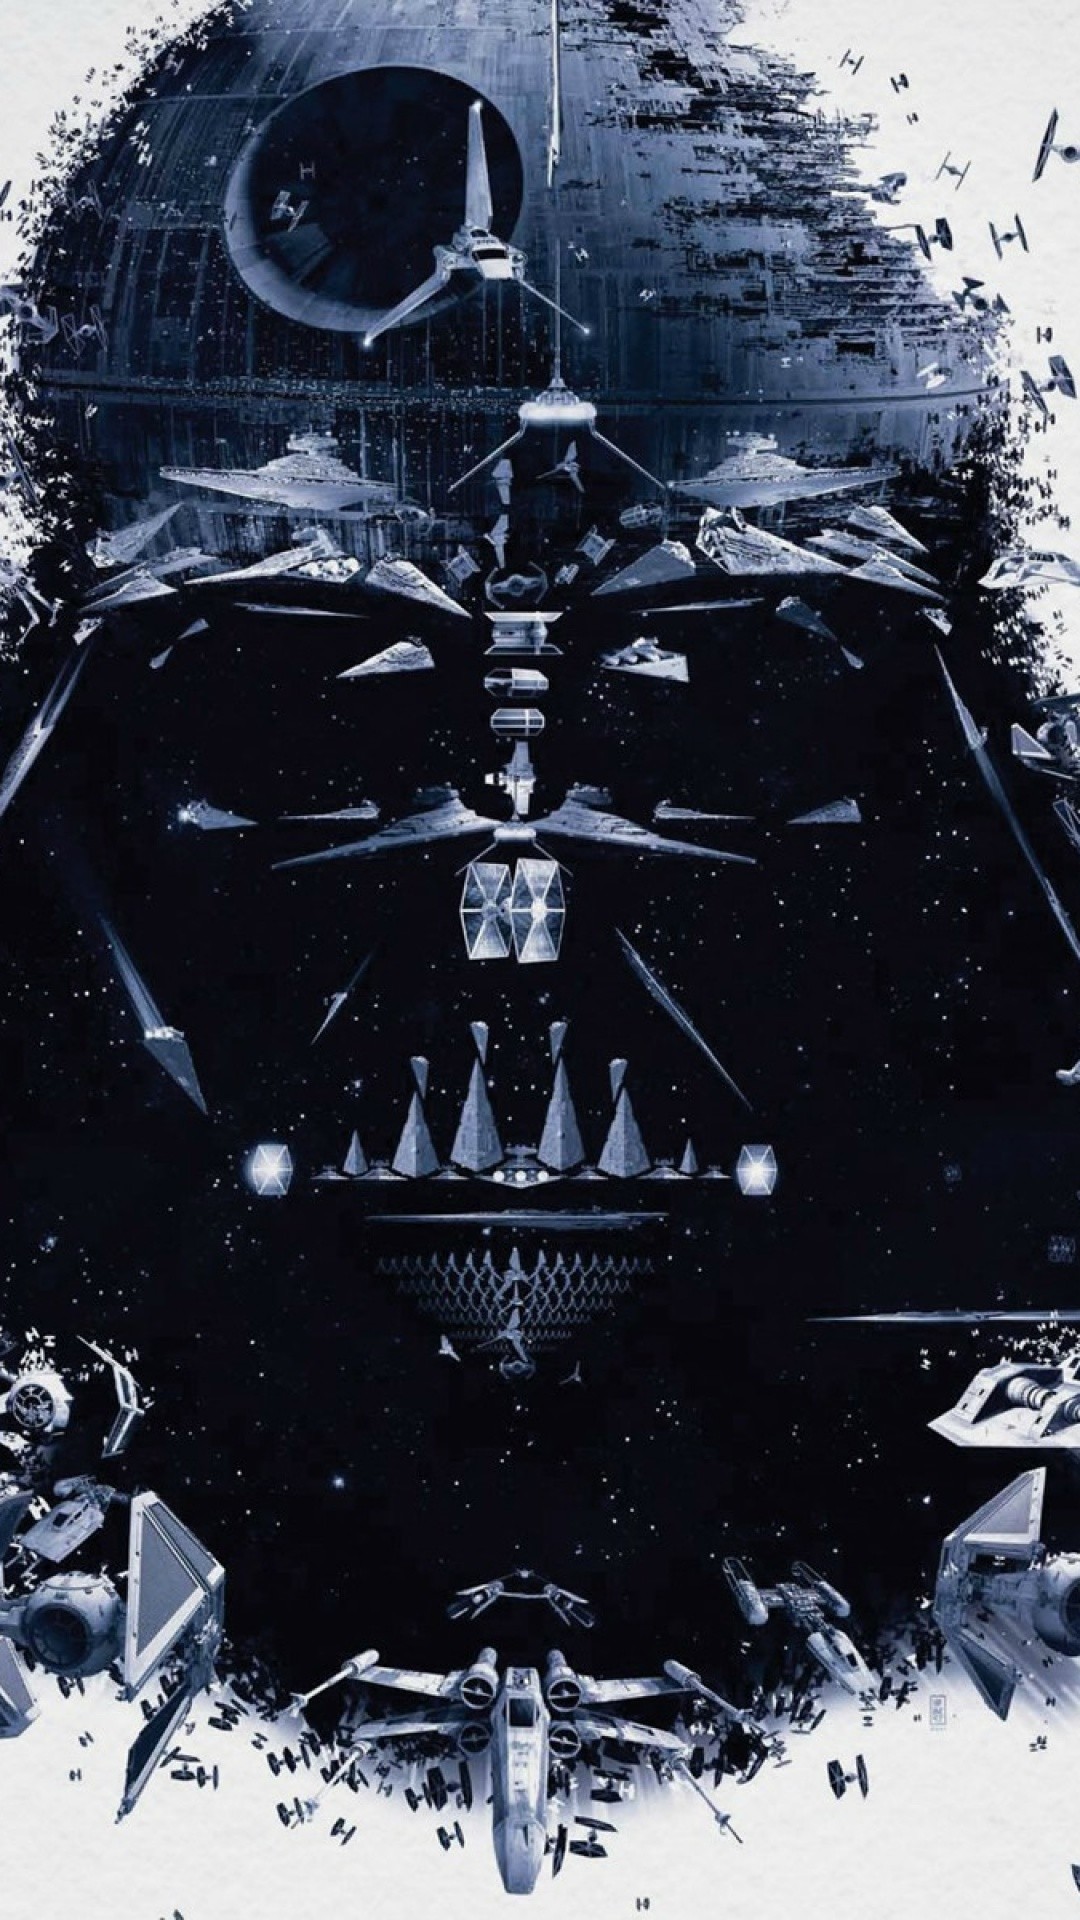 1080x1920 Star Wars Darth Vader Spaceships Android Wallpaper.jpg (1080Ã1920)